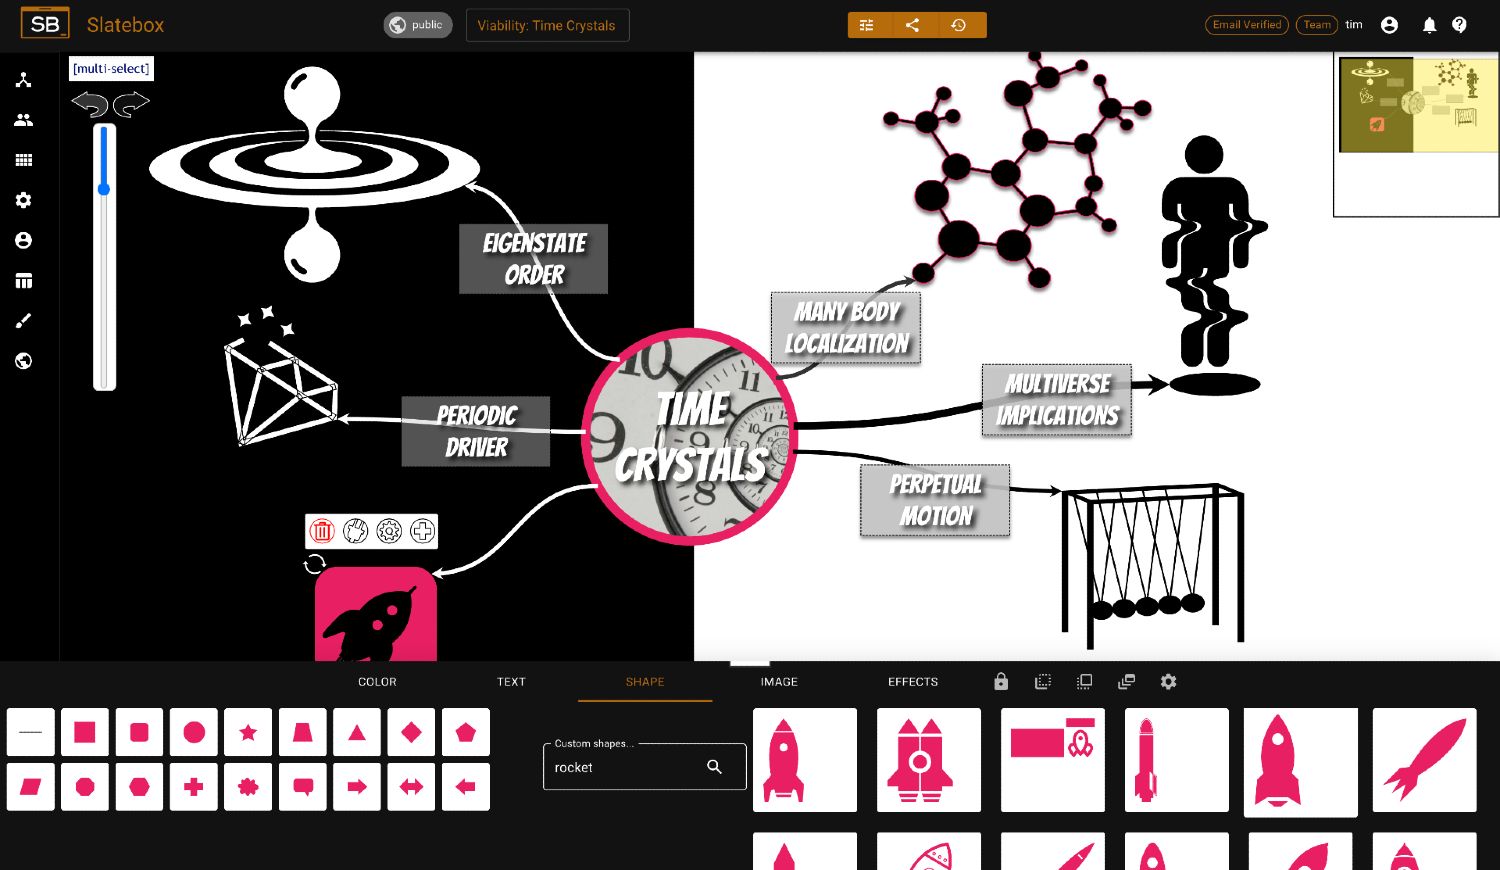 Slatebox - A platform to create, edit visualizations using natural language